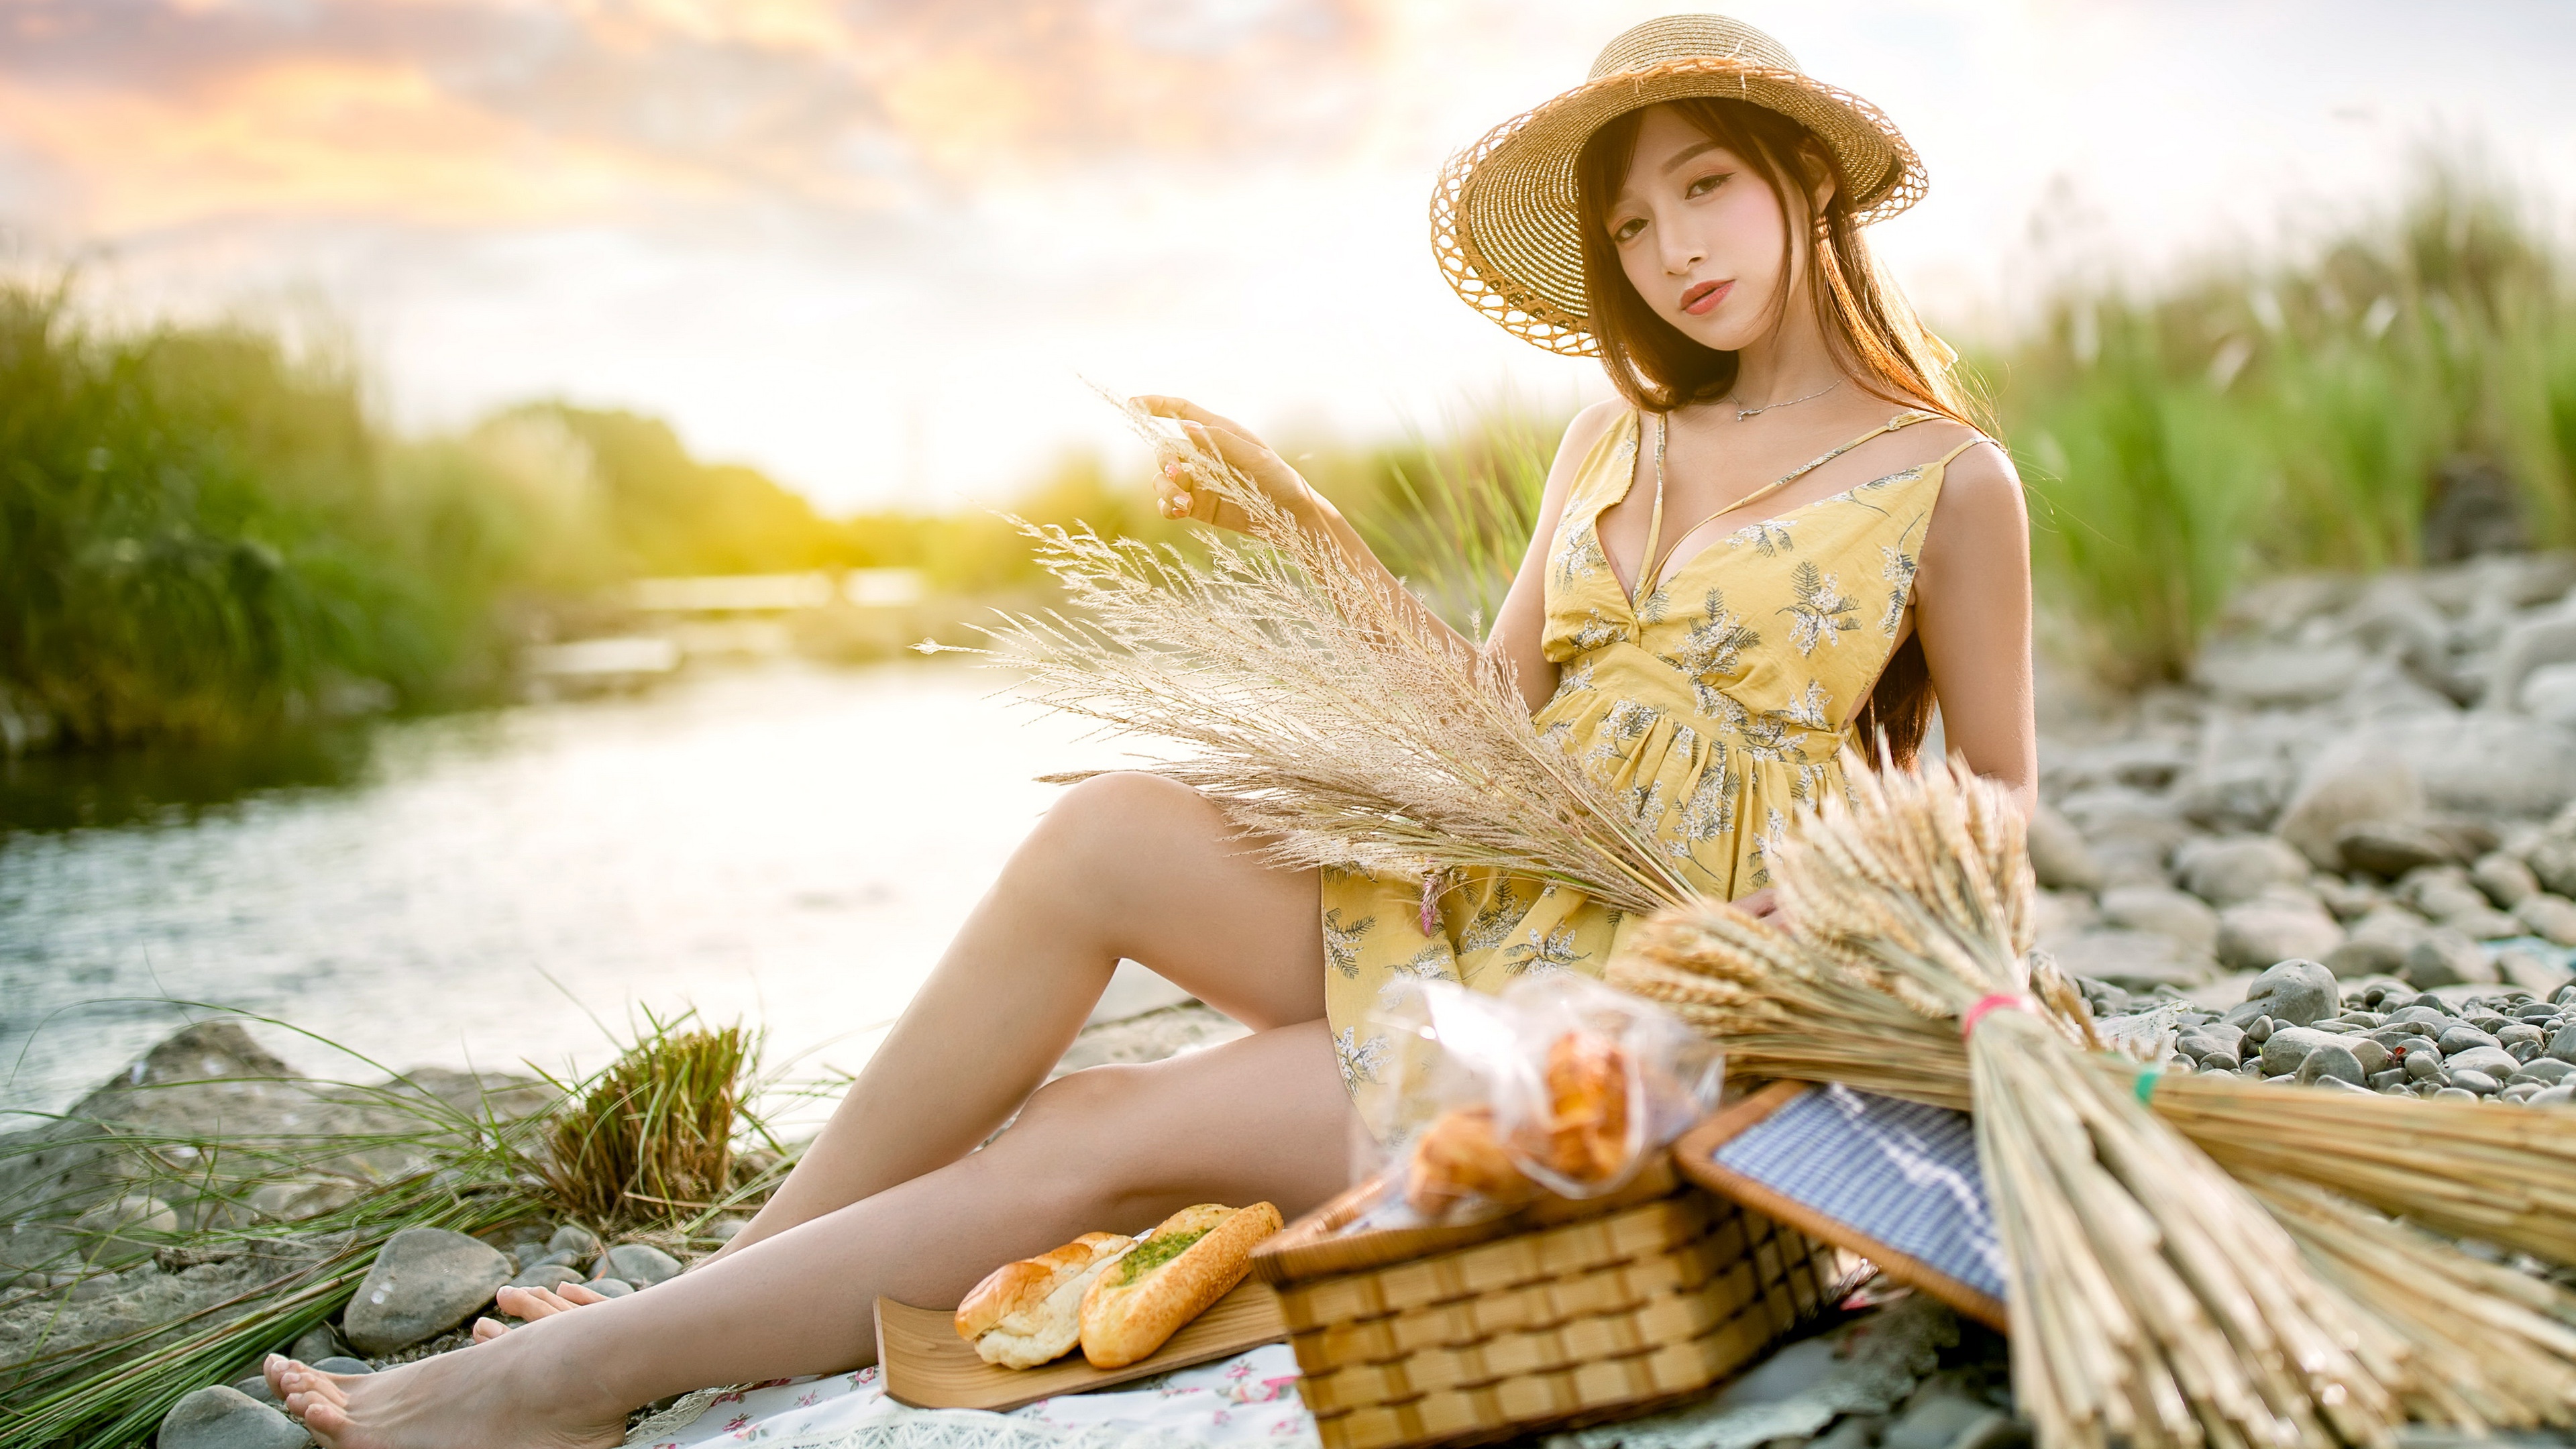 Women Women Outdoors Outdoors Asian Model Hat Women With Hats Looking At Viewer Dress Summer Dress Y 3840x2160